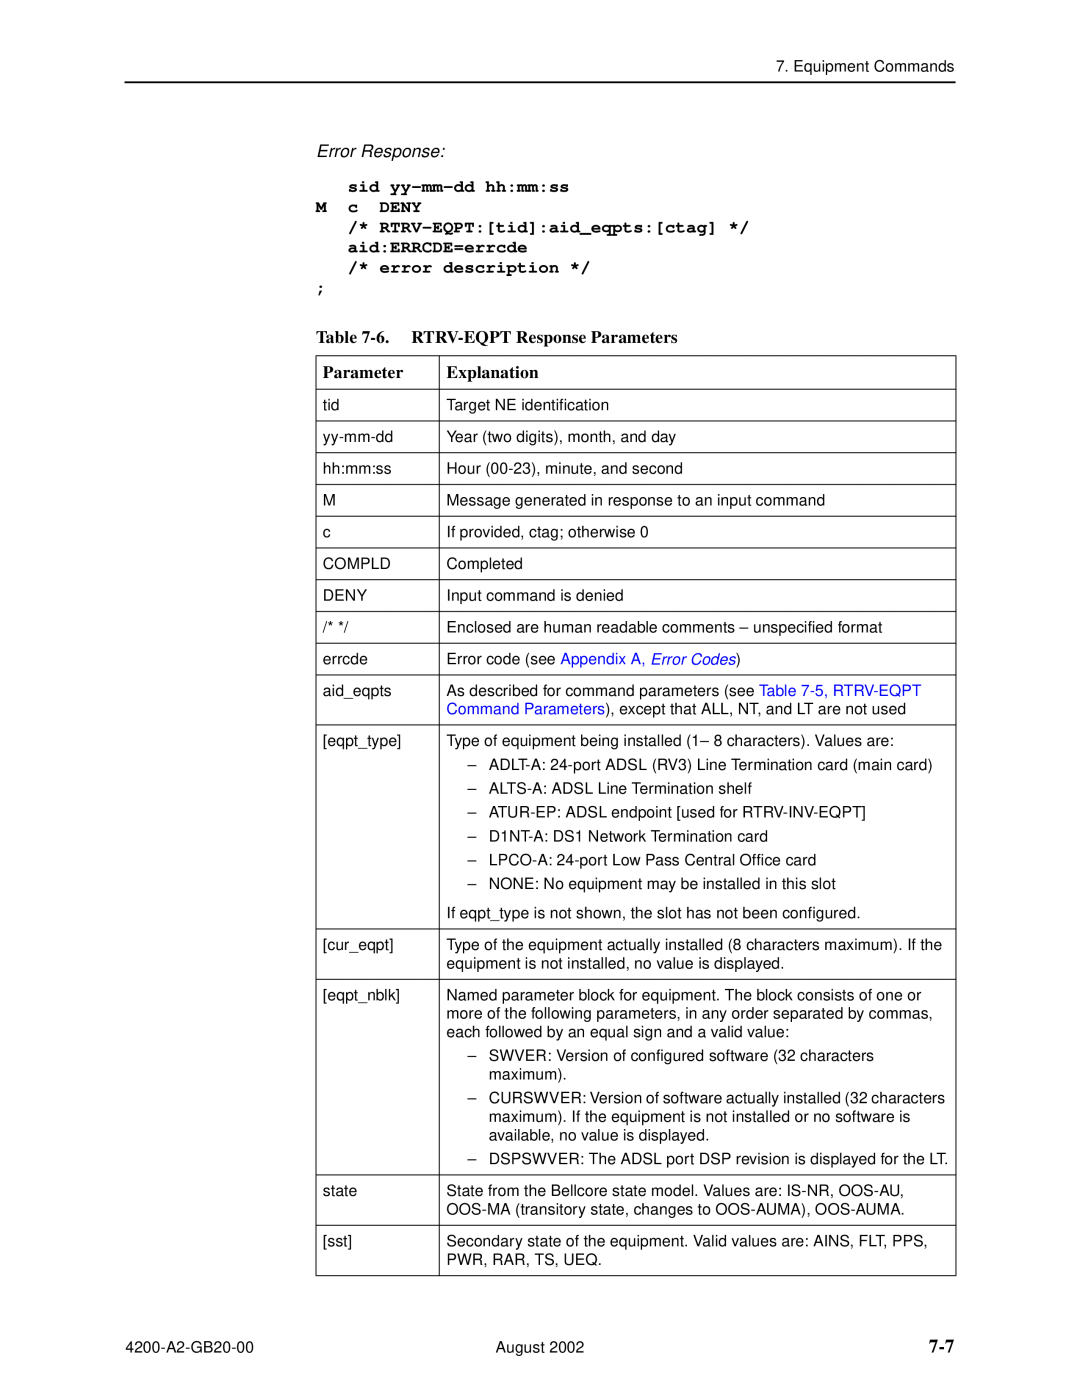 Paradyne 4200 manual RTRV-EQPTtidaideqptsctag */ aidERRCDE=errcde error description, 6. RTRV-EQPT Response Parameters 